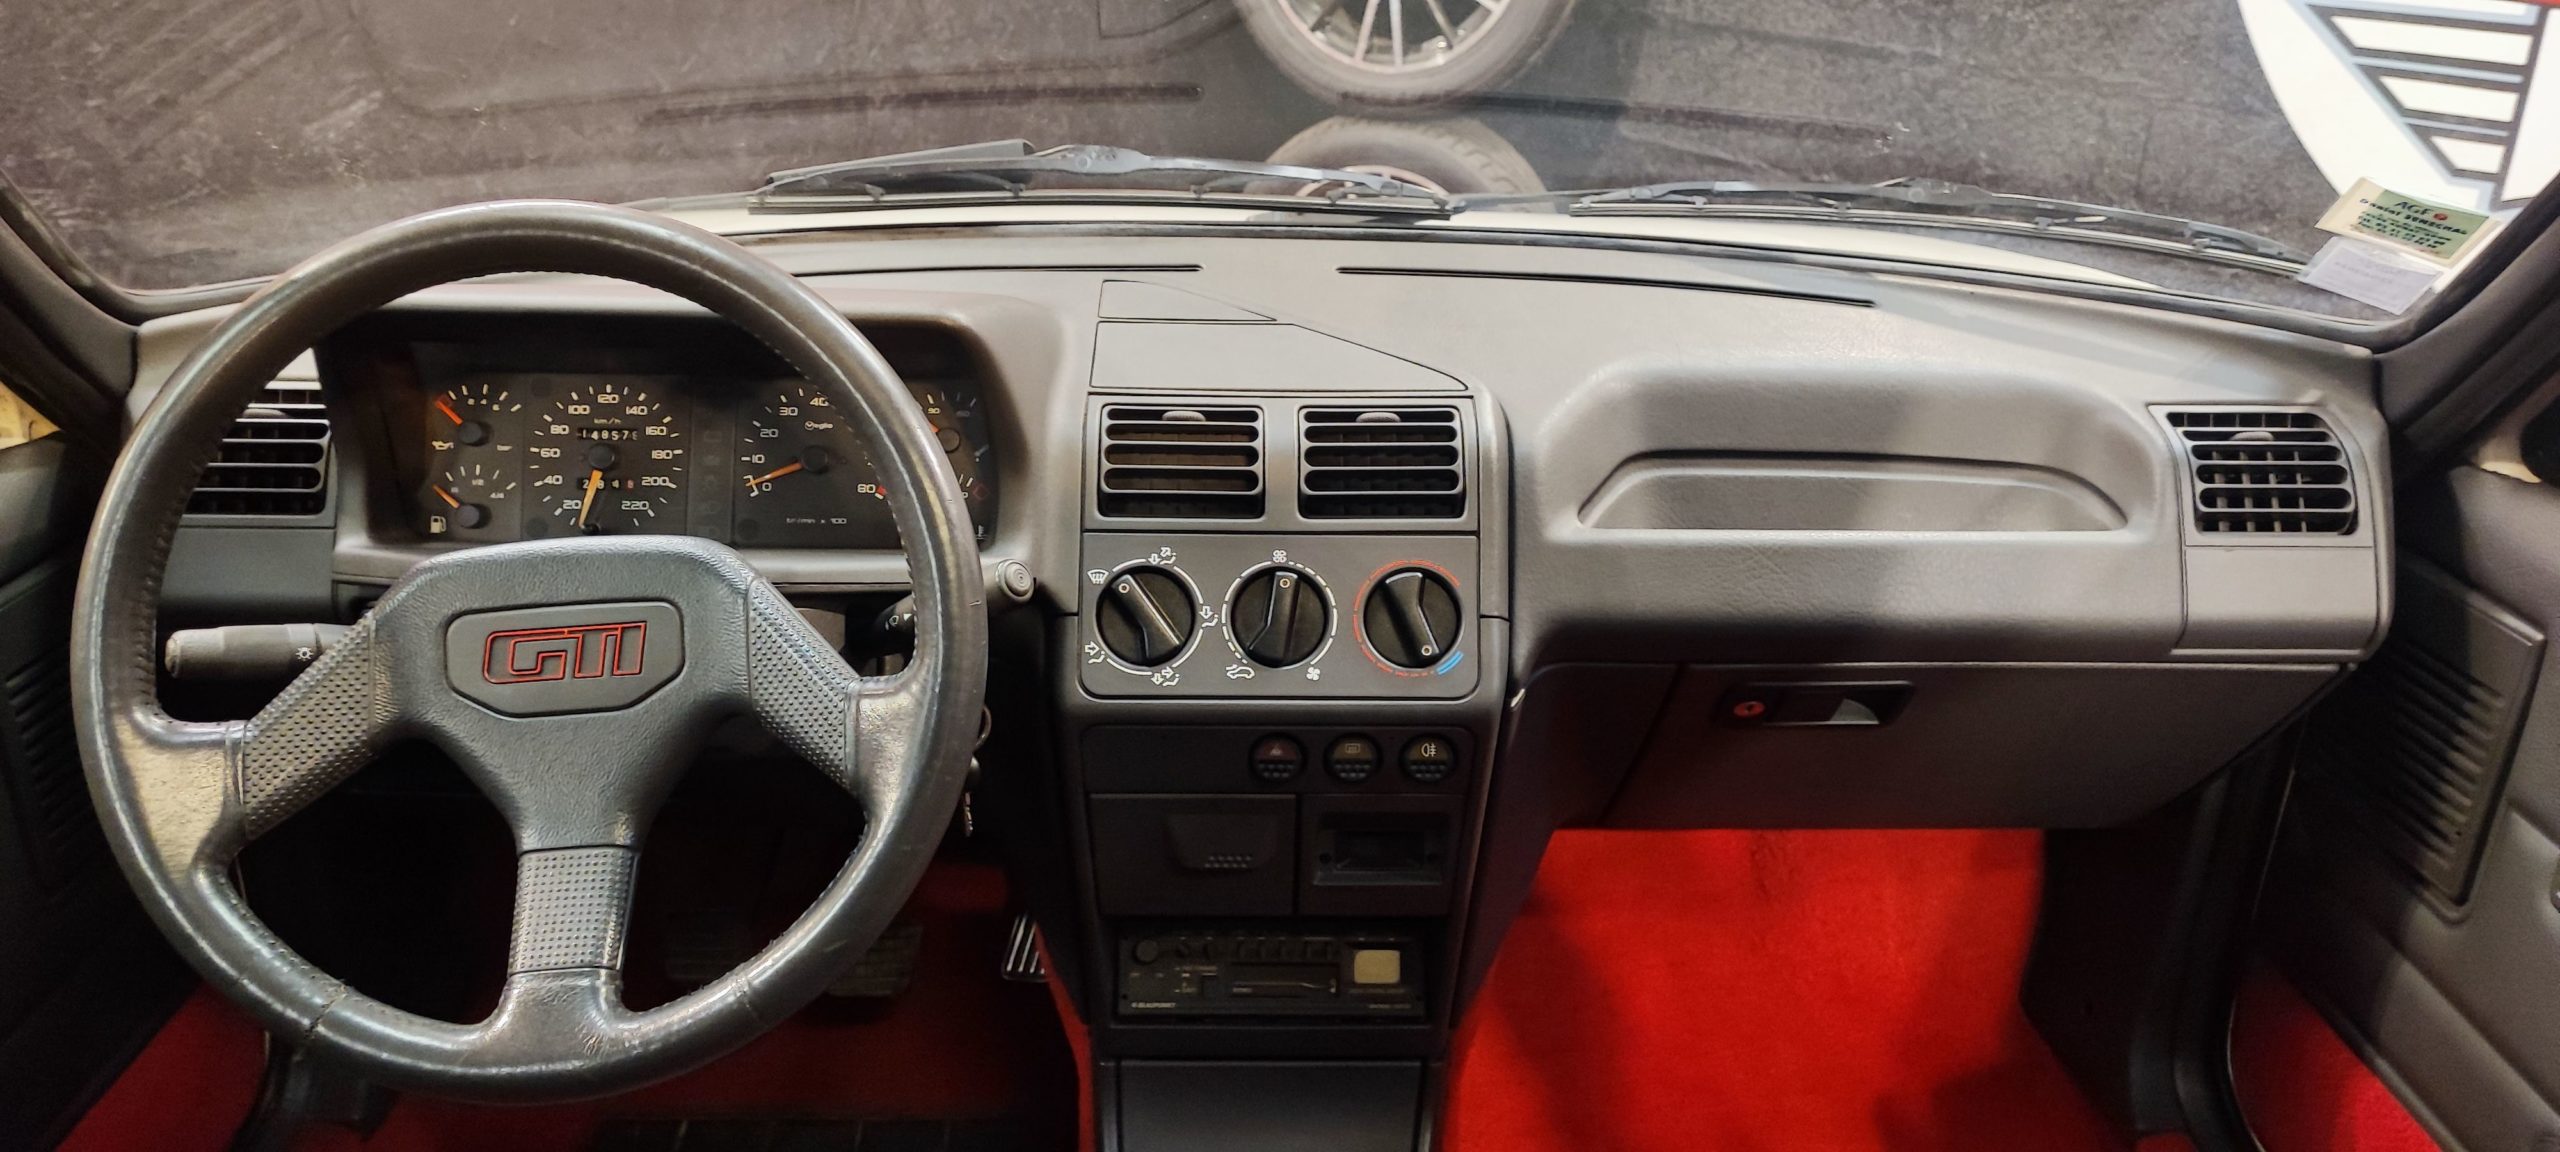 Peugeot 205 GTI 1.6 – 1988